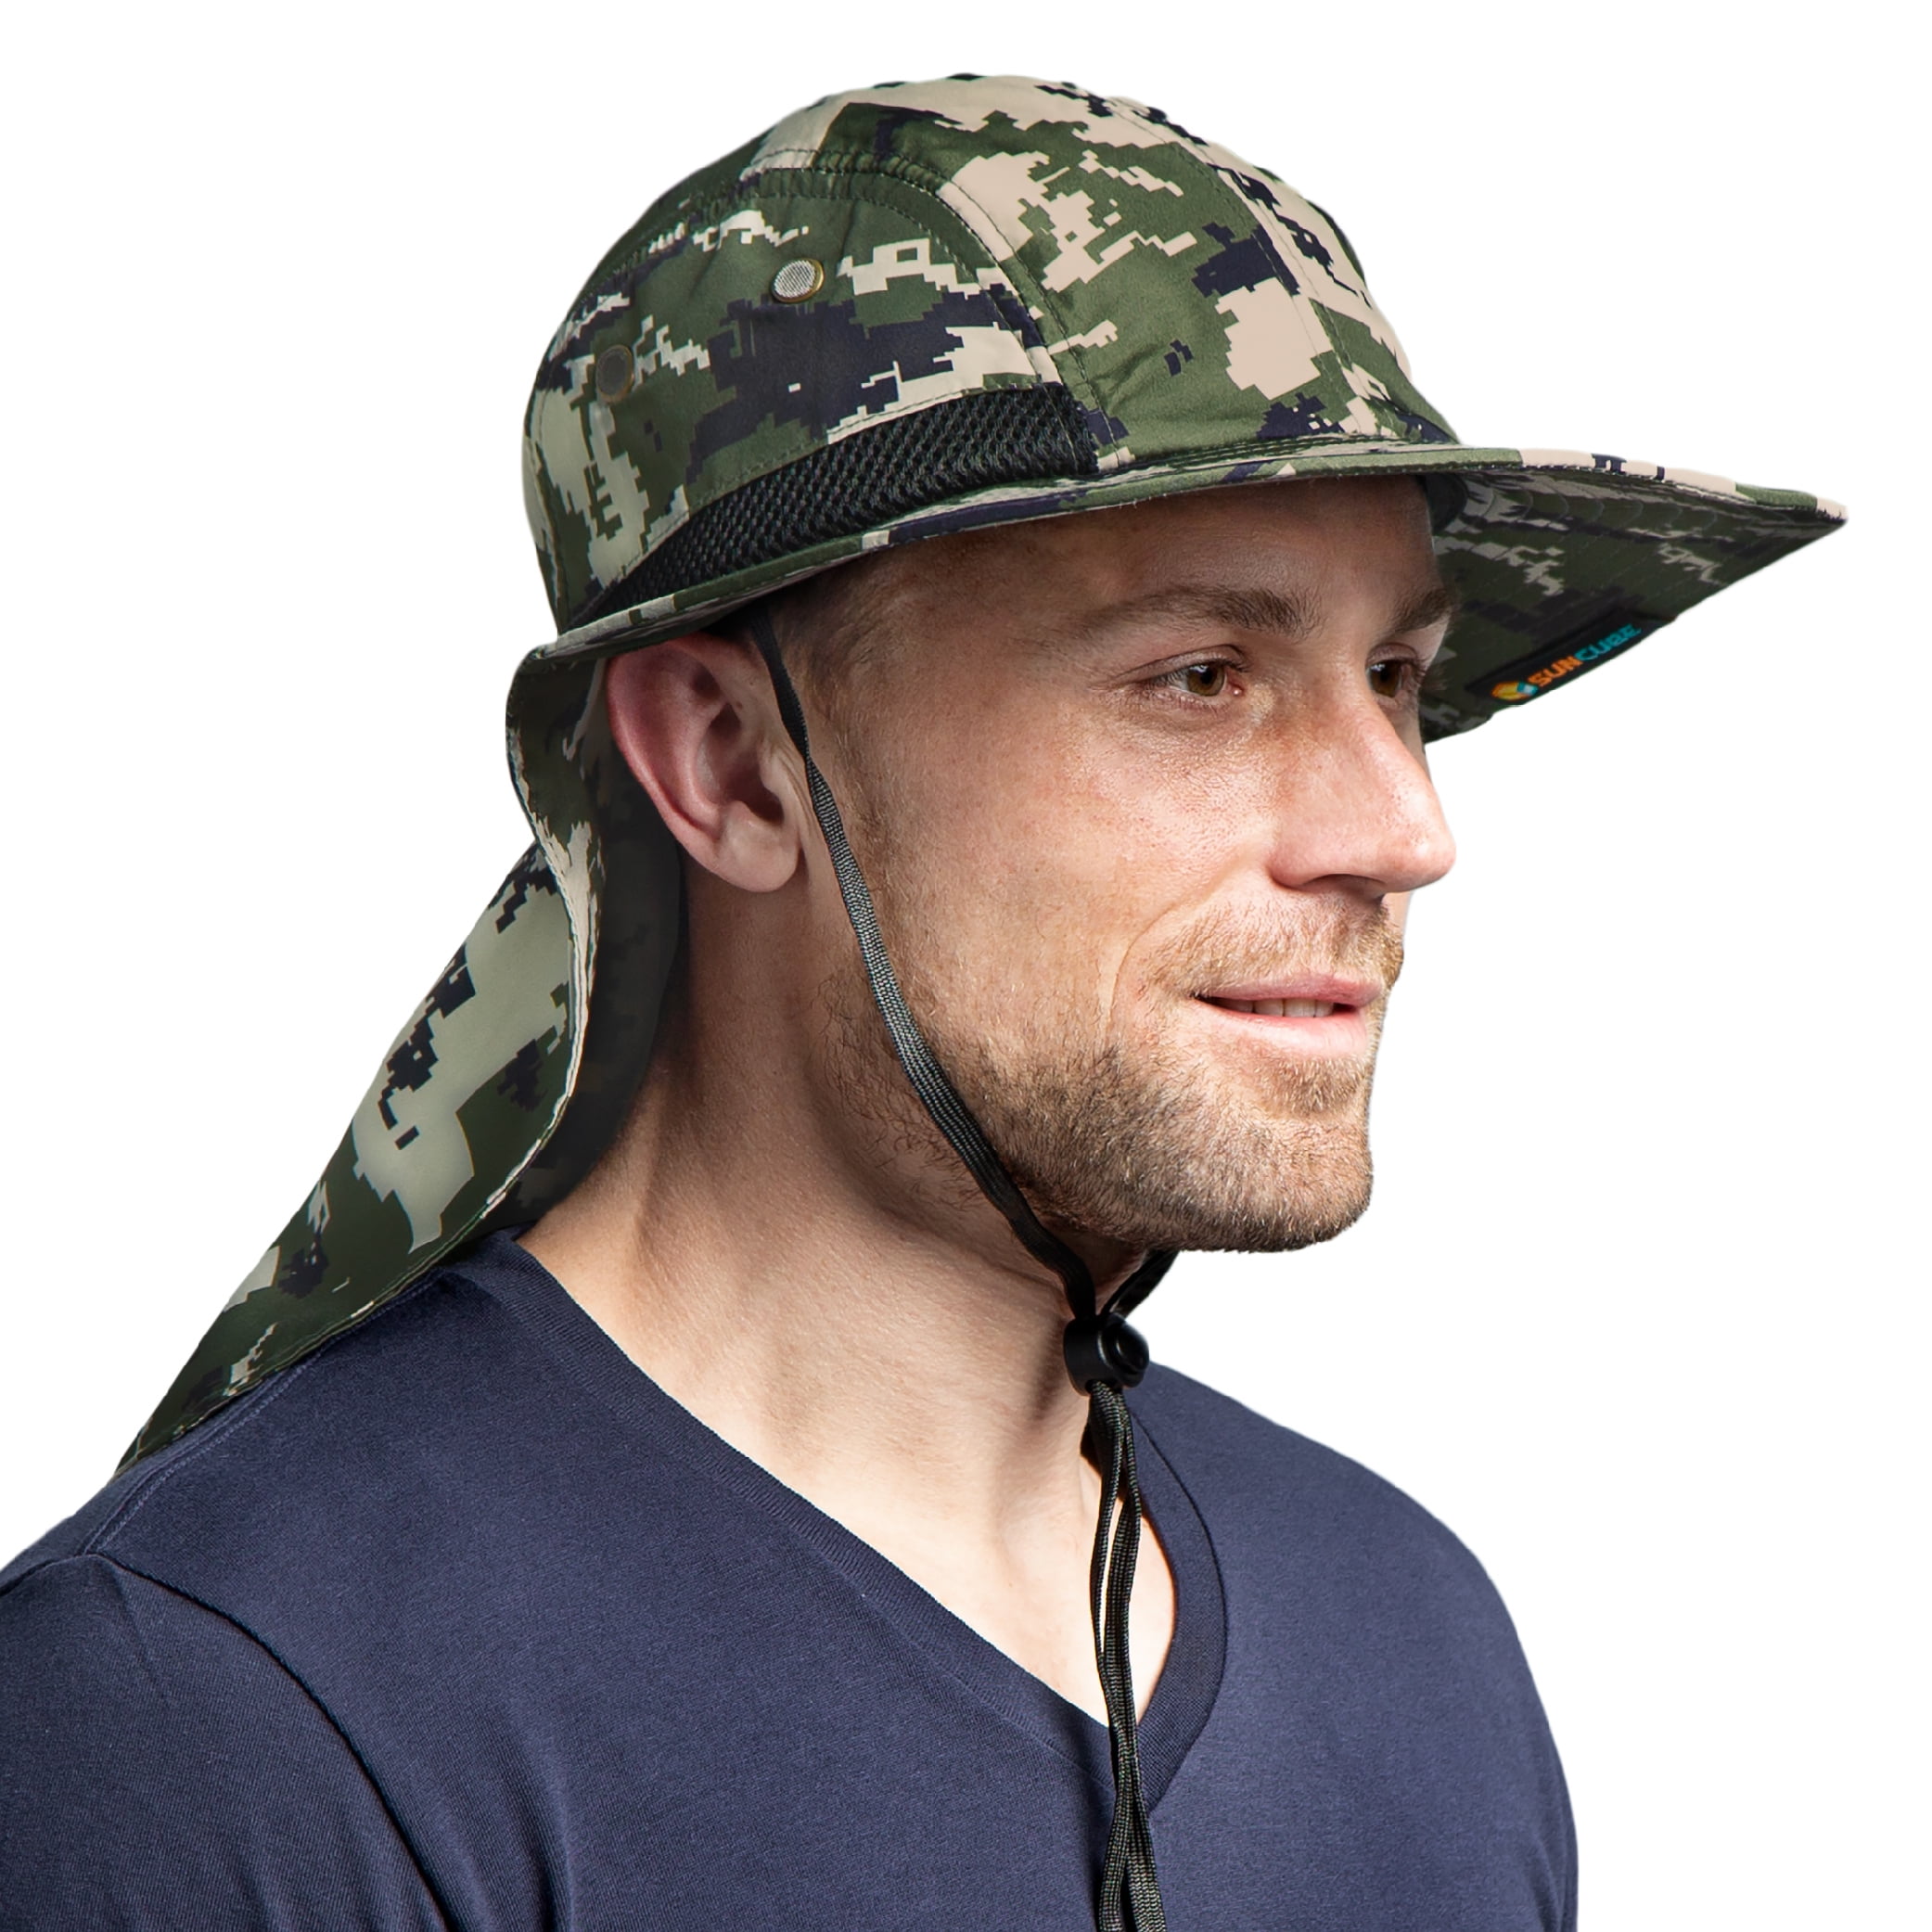 SUN CUBE Sun Hat for Men, Wide Brim Fishing Hat Neck Flap Cover